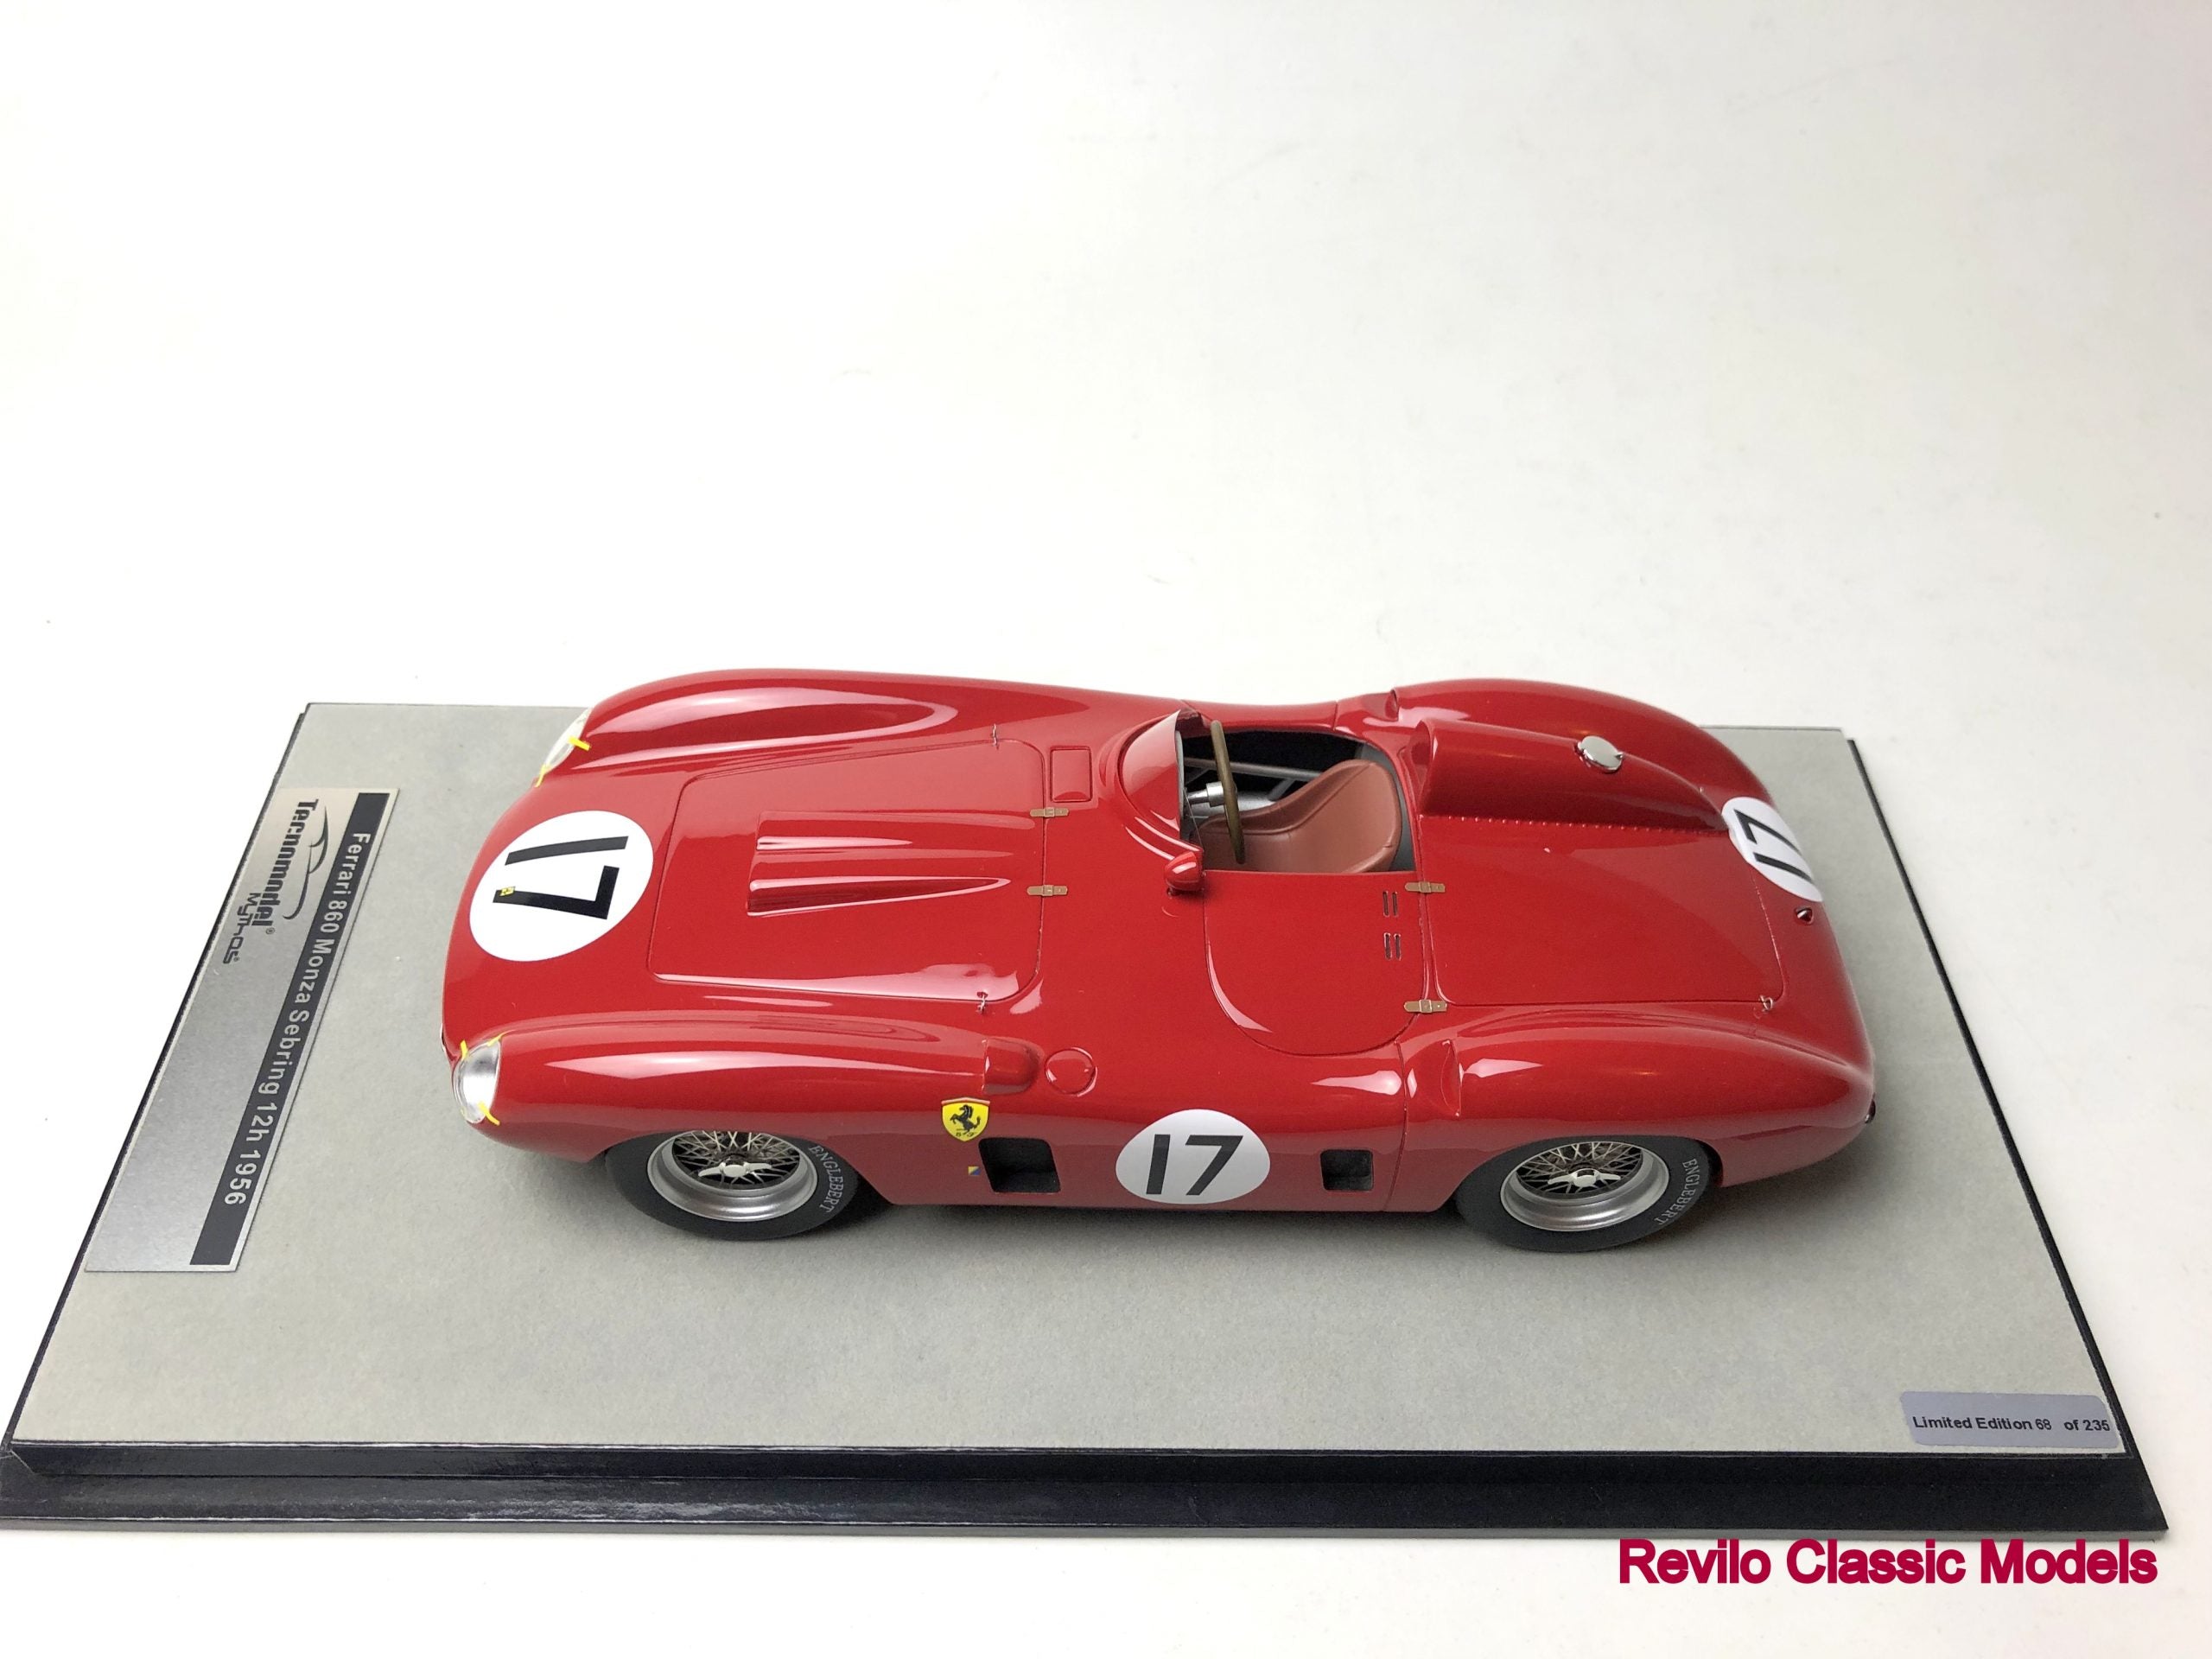 Ferrari 850 Monza Sebring 12 Hour Winner 1956 1:18 scale